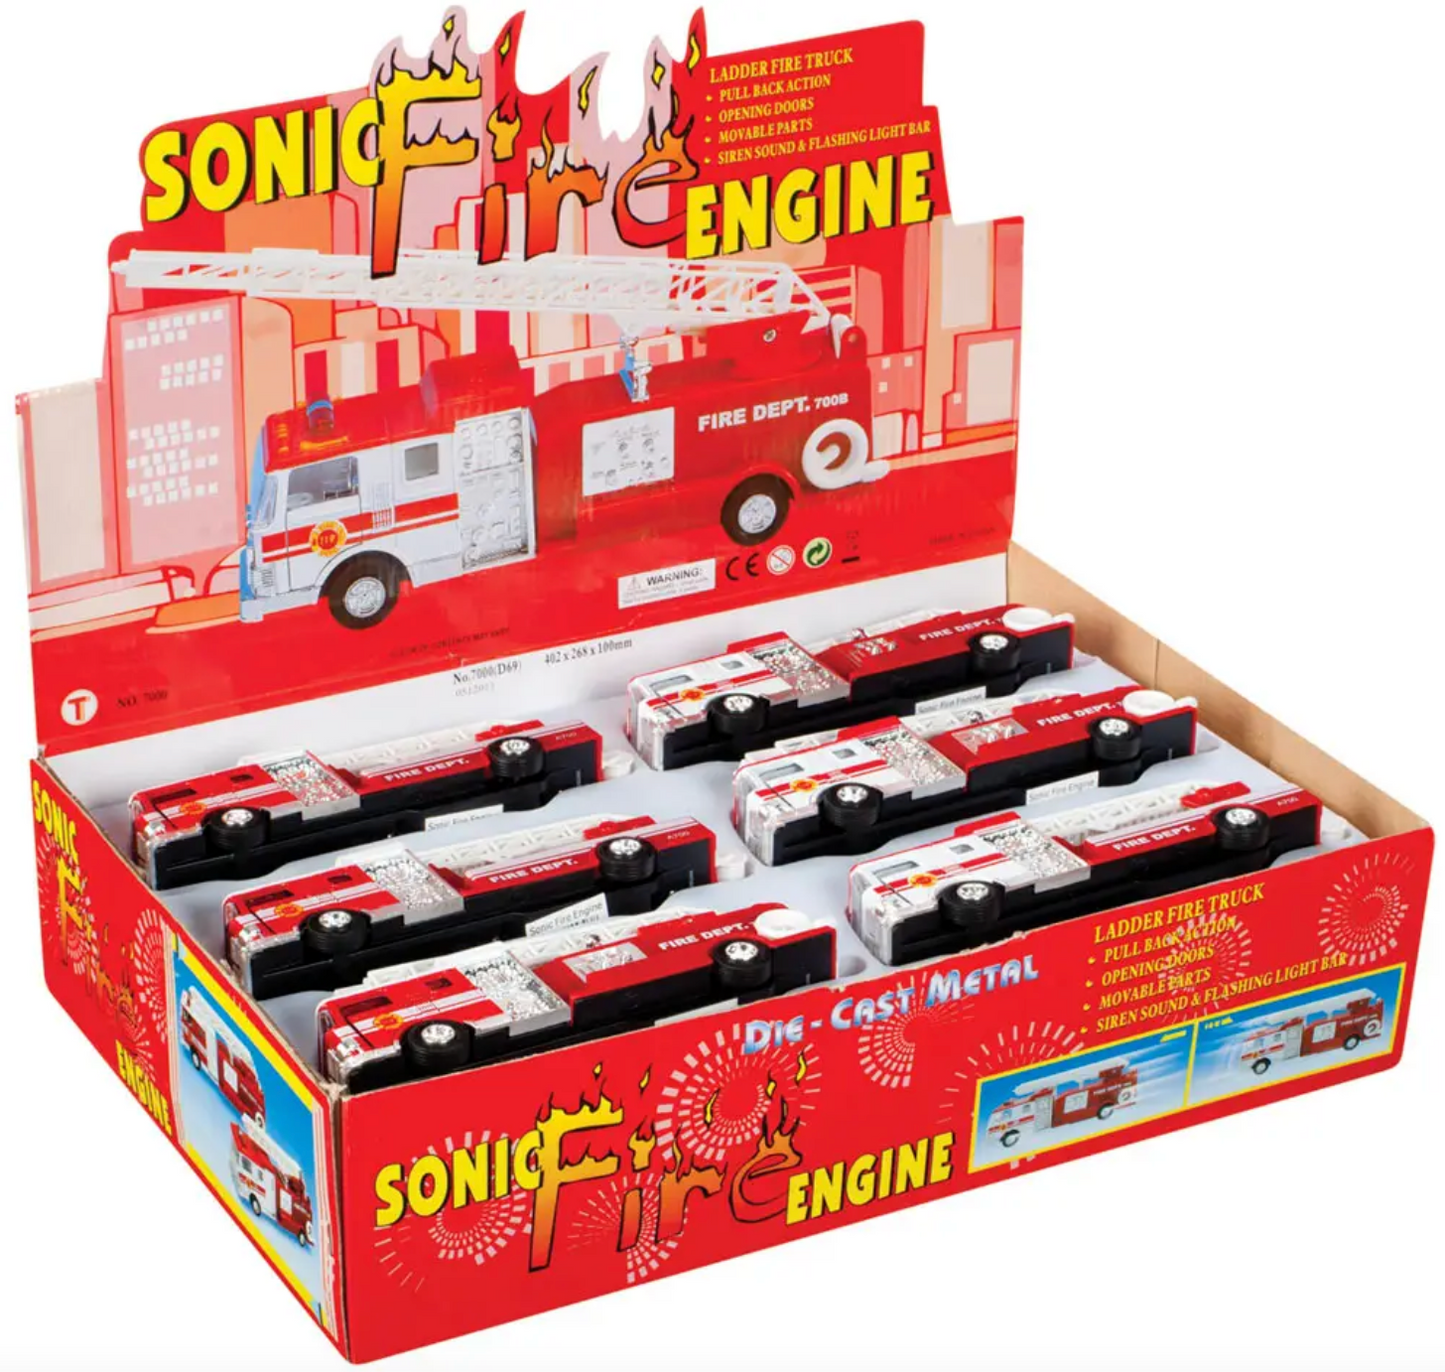 Sonic Fire Engine